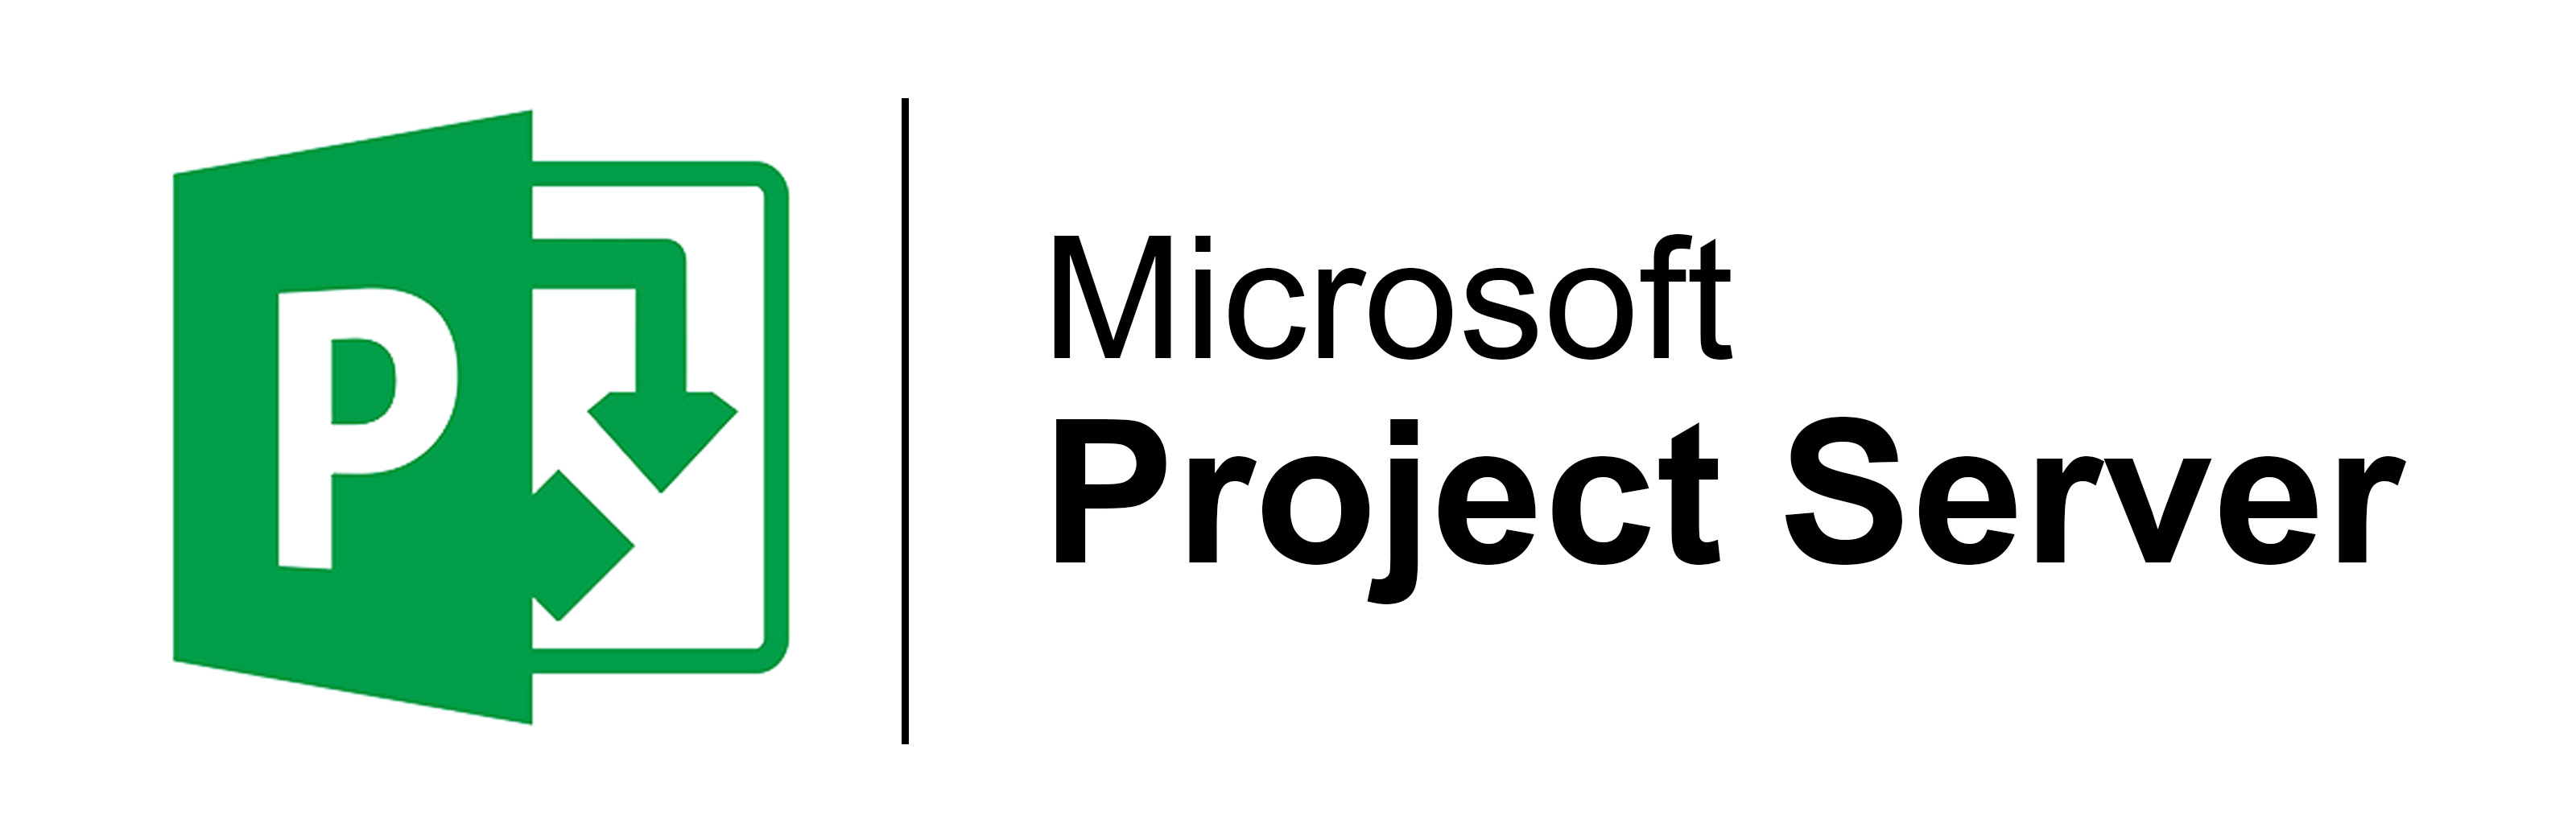 Microsoft Project Server logo mehregan